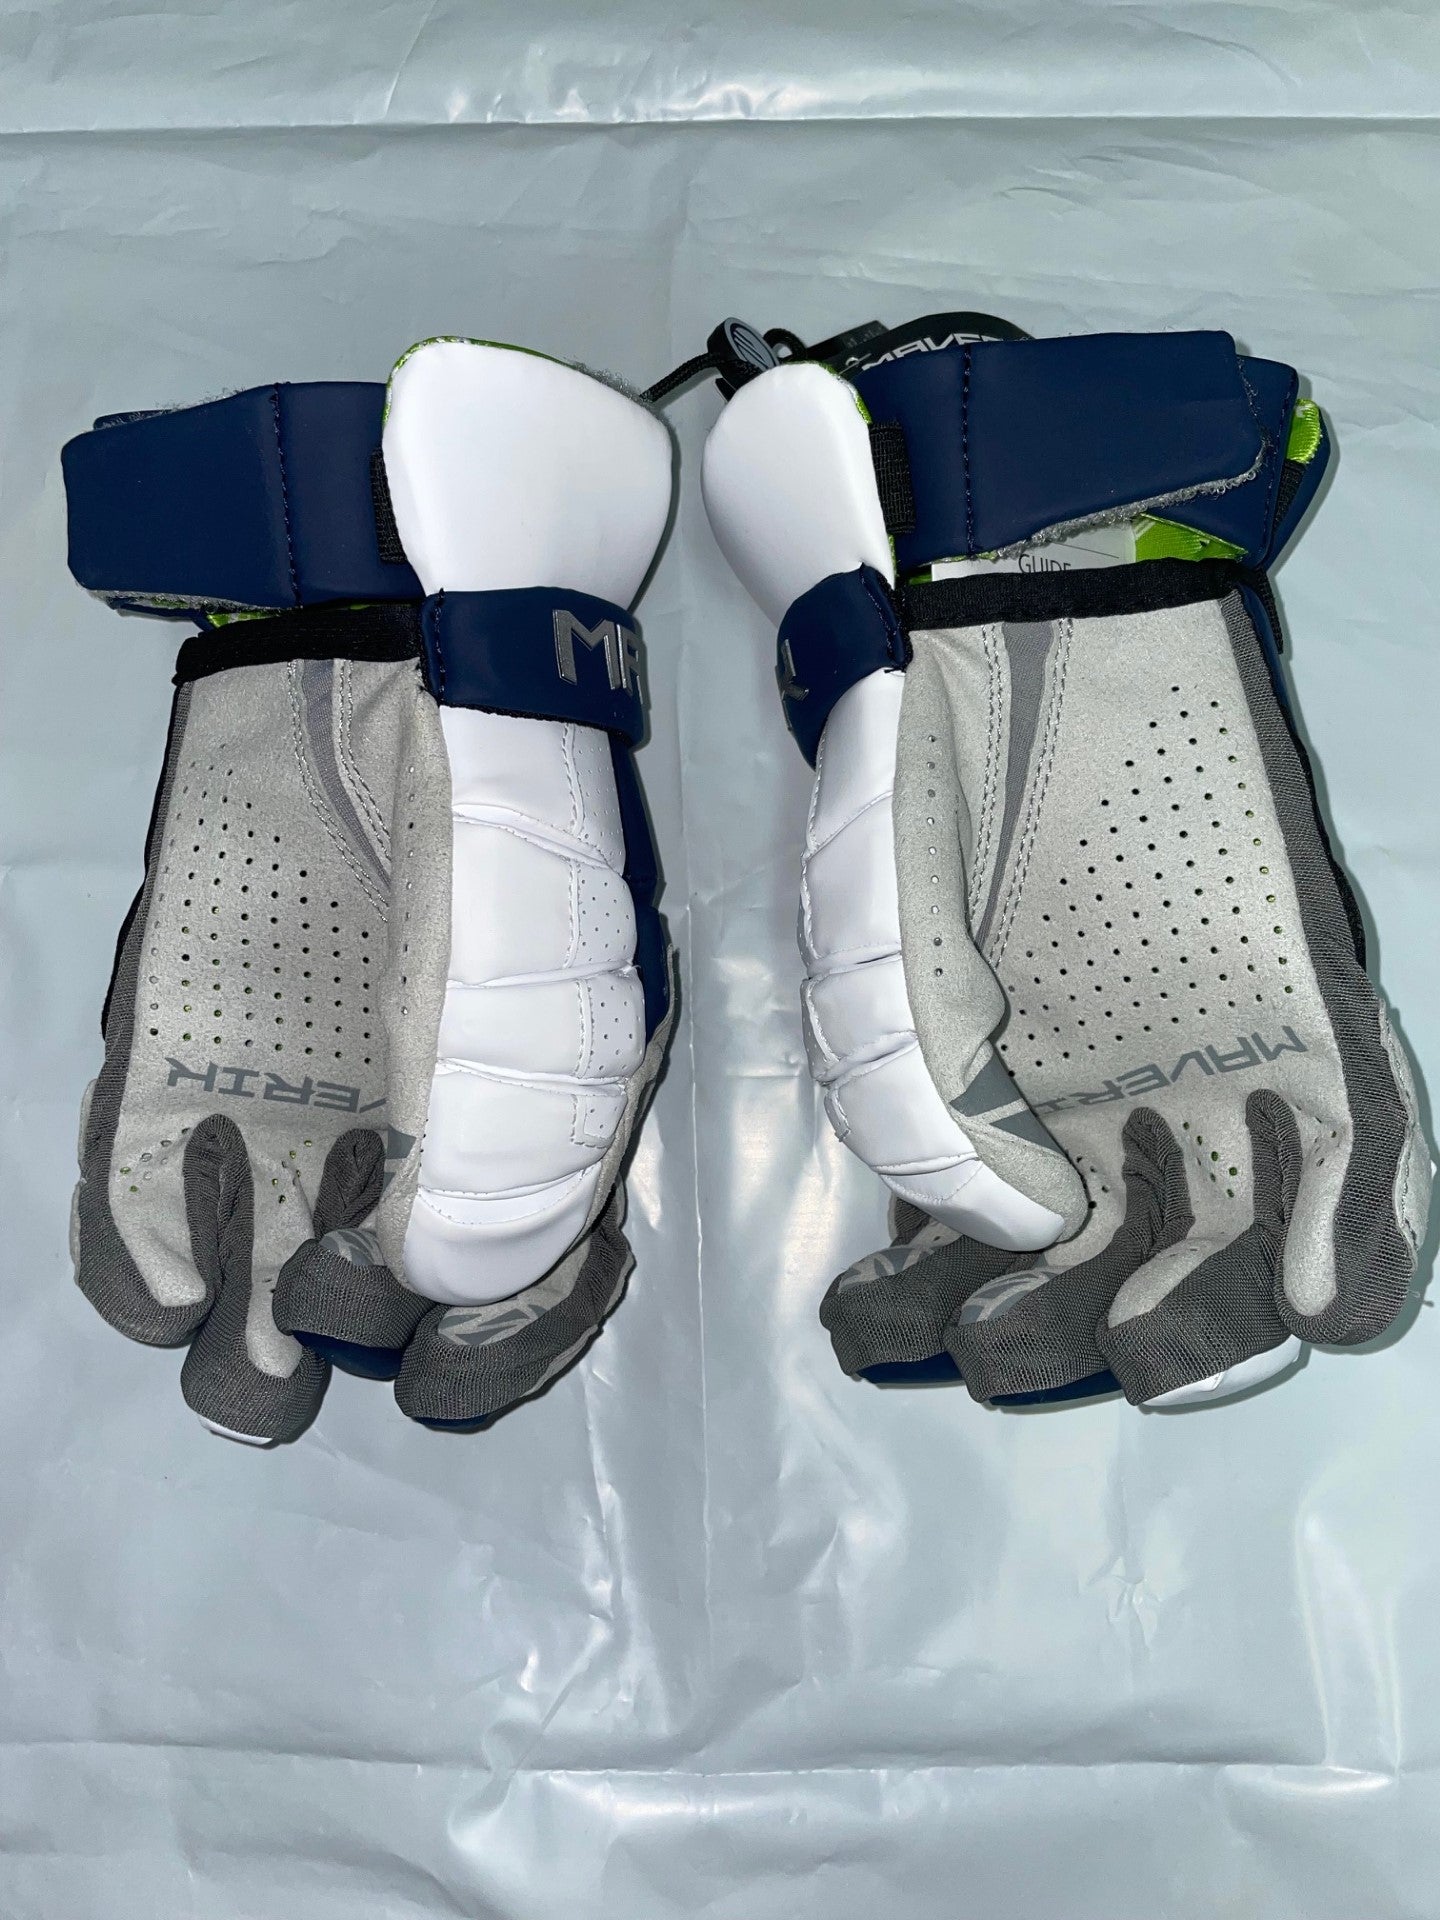 Maverik M6 2026 Lacrosse Gloves - Custom-Sports Replay - Sports Excellence-Sports Replay - Sports Excellence